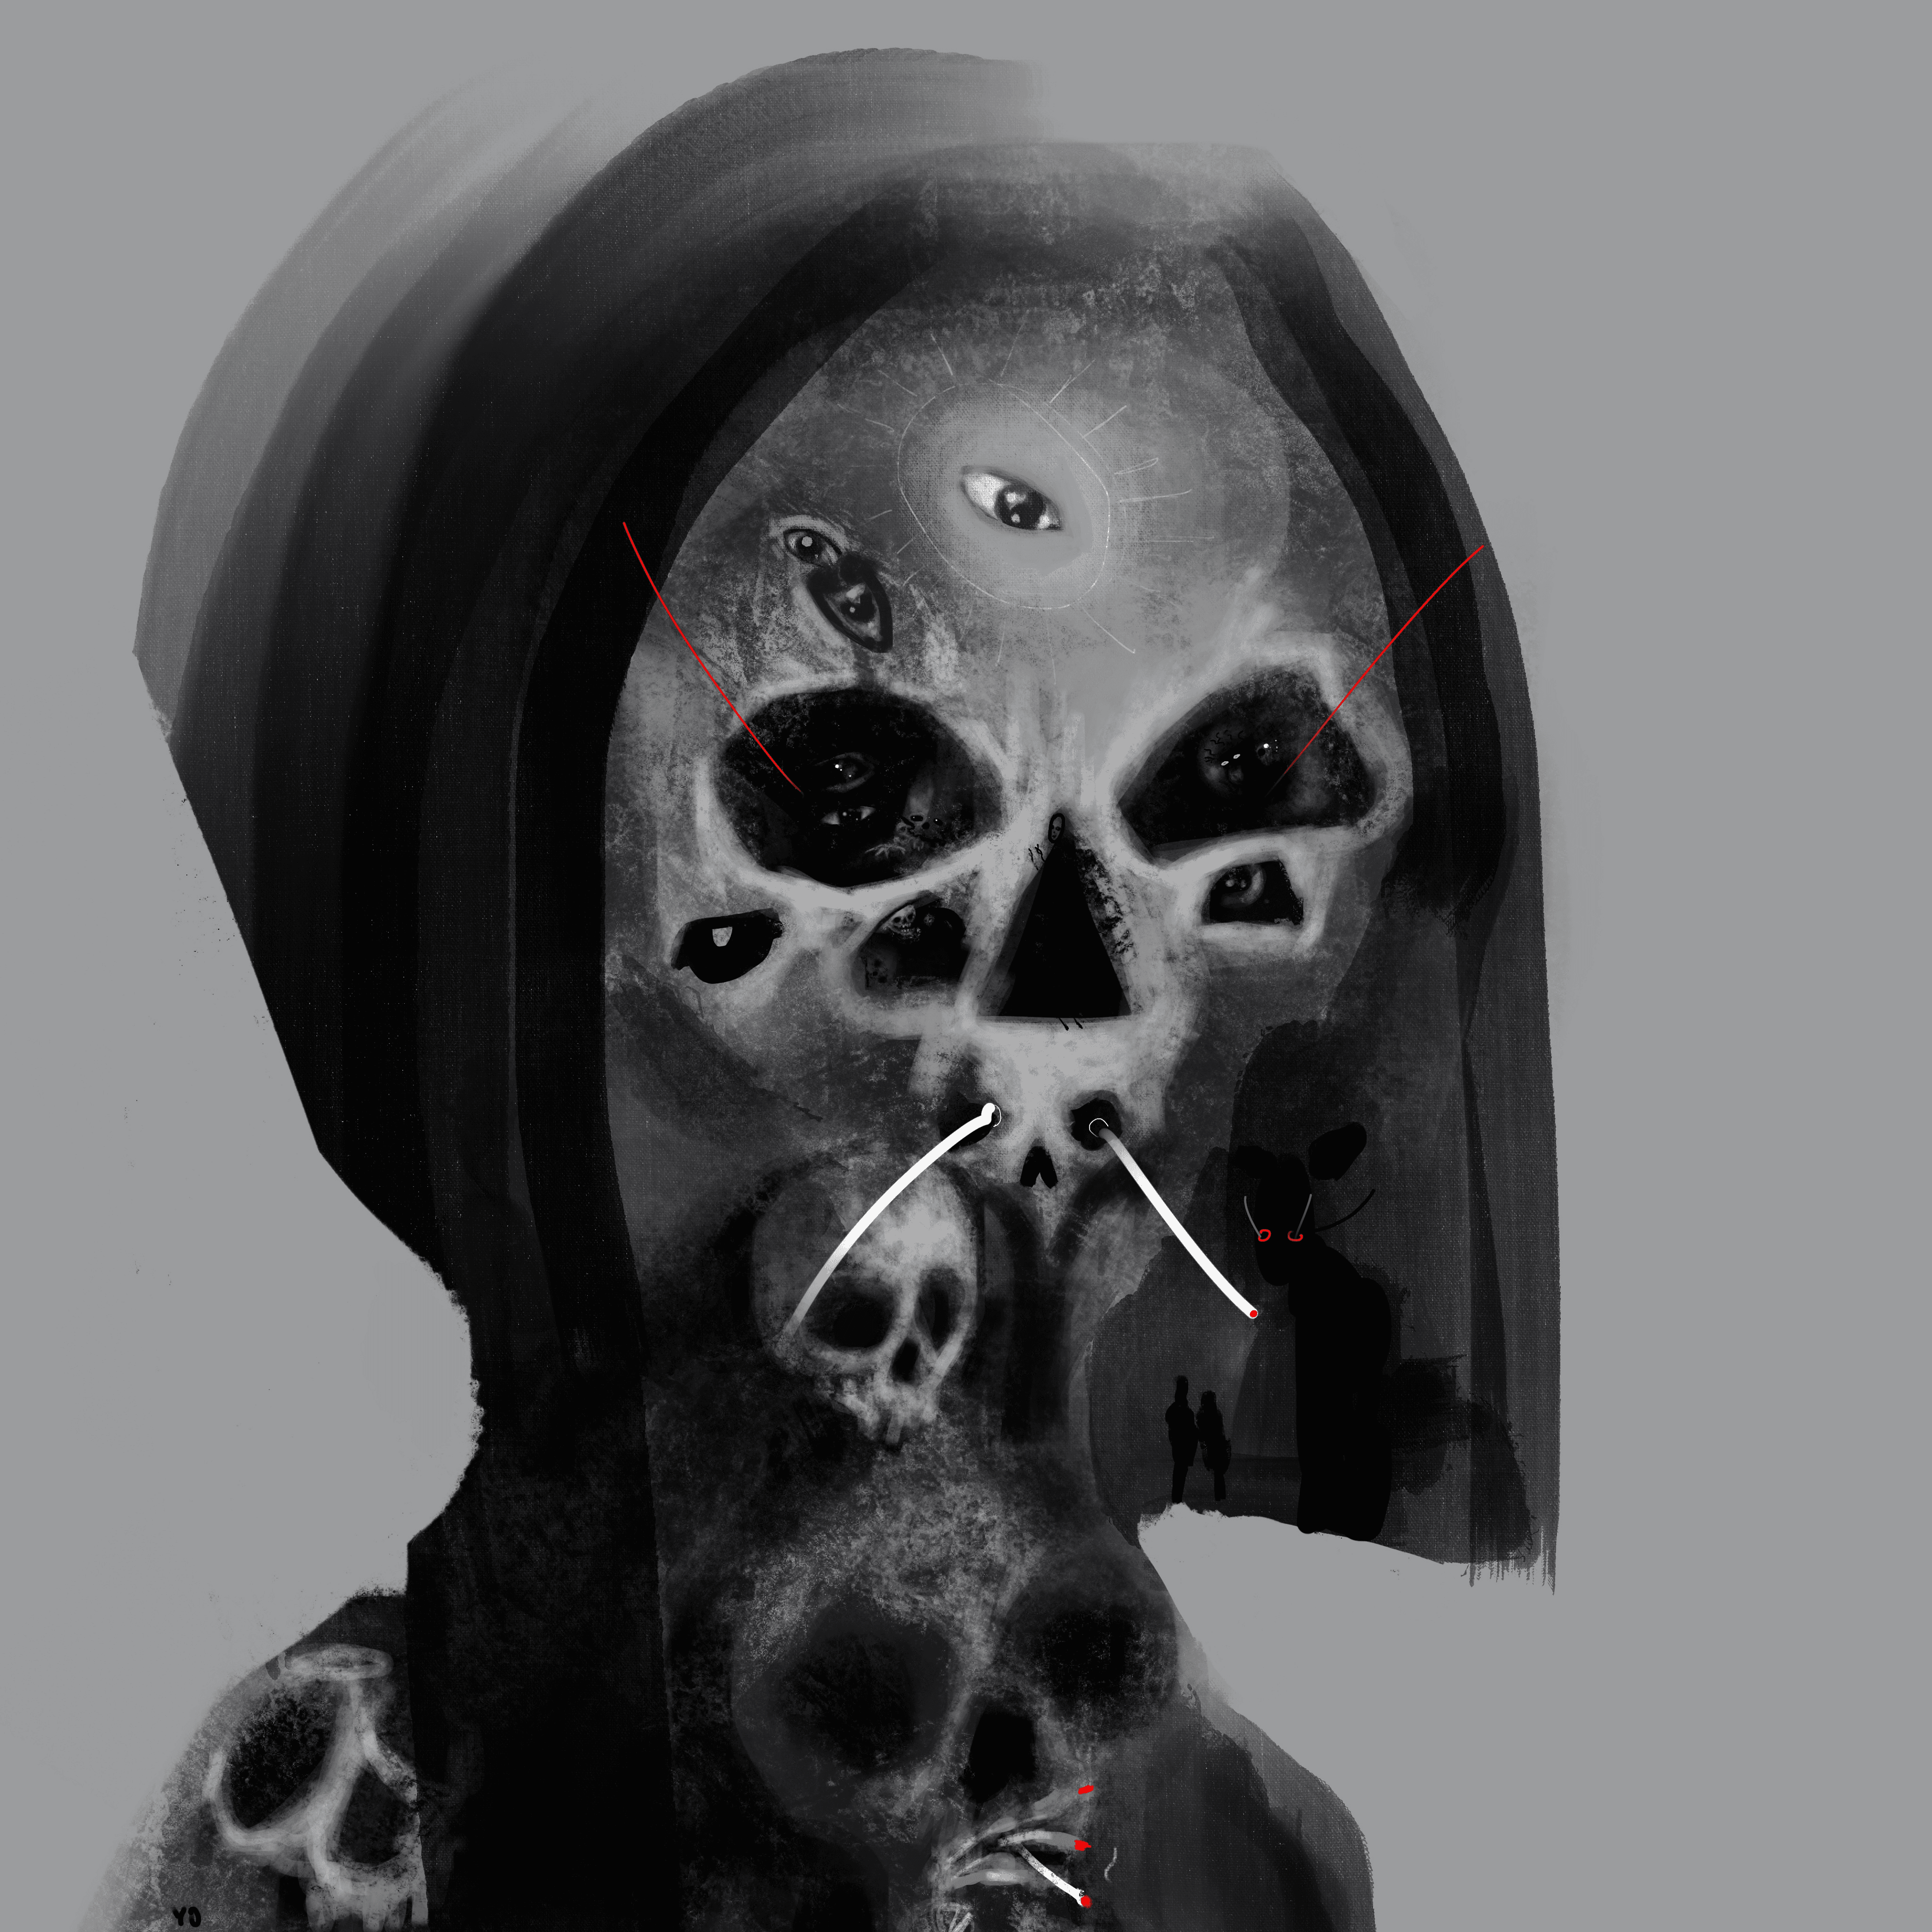 Skull #269 - "Productive Smoker"